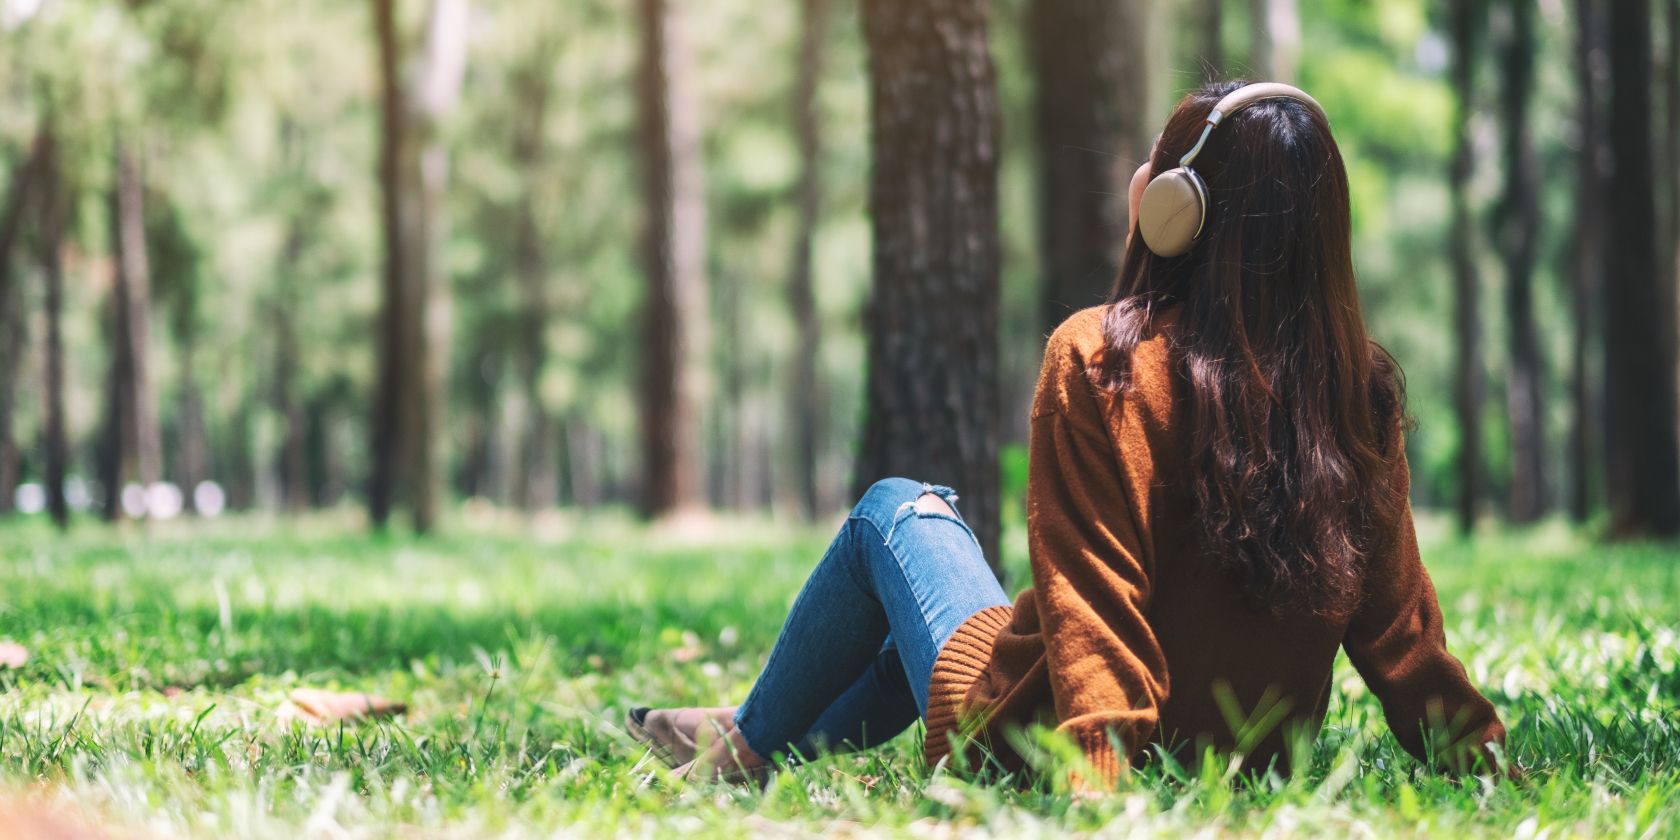 woman wearing headphones relaxing in forest